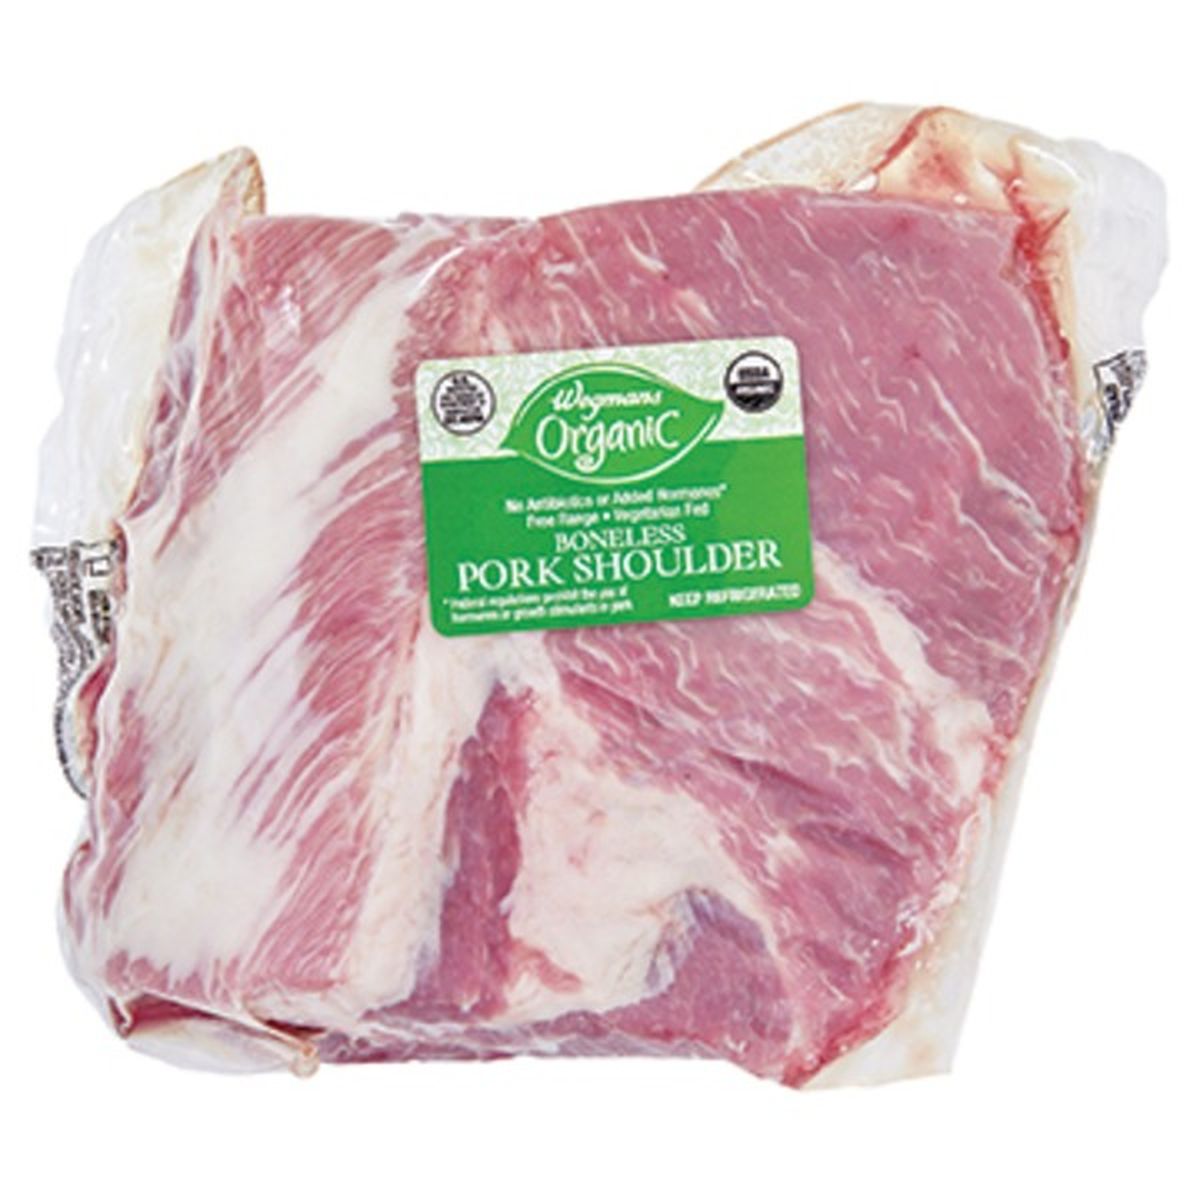 Calories in Wegmans Organic Boneless Pork Shoulder